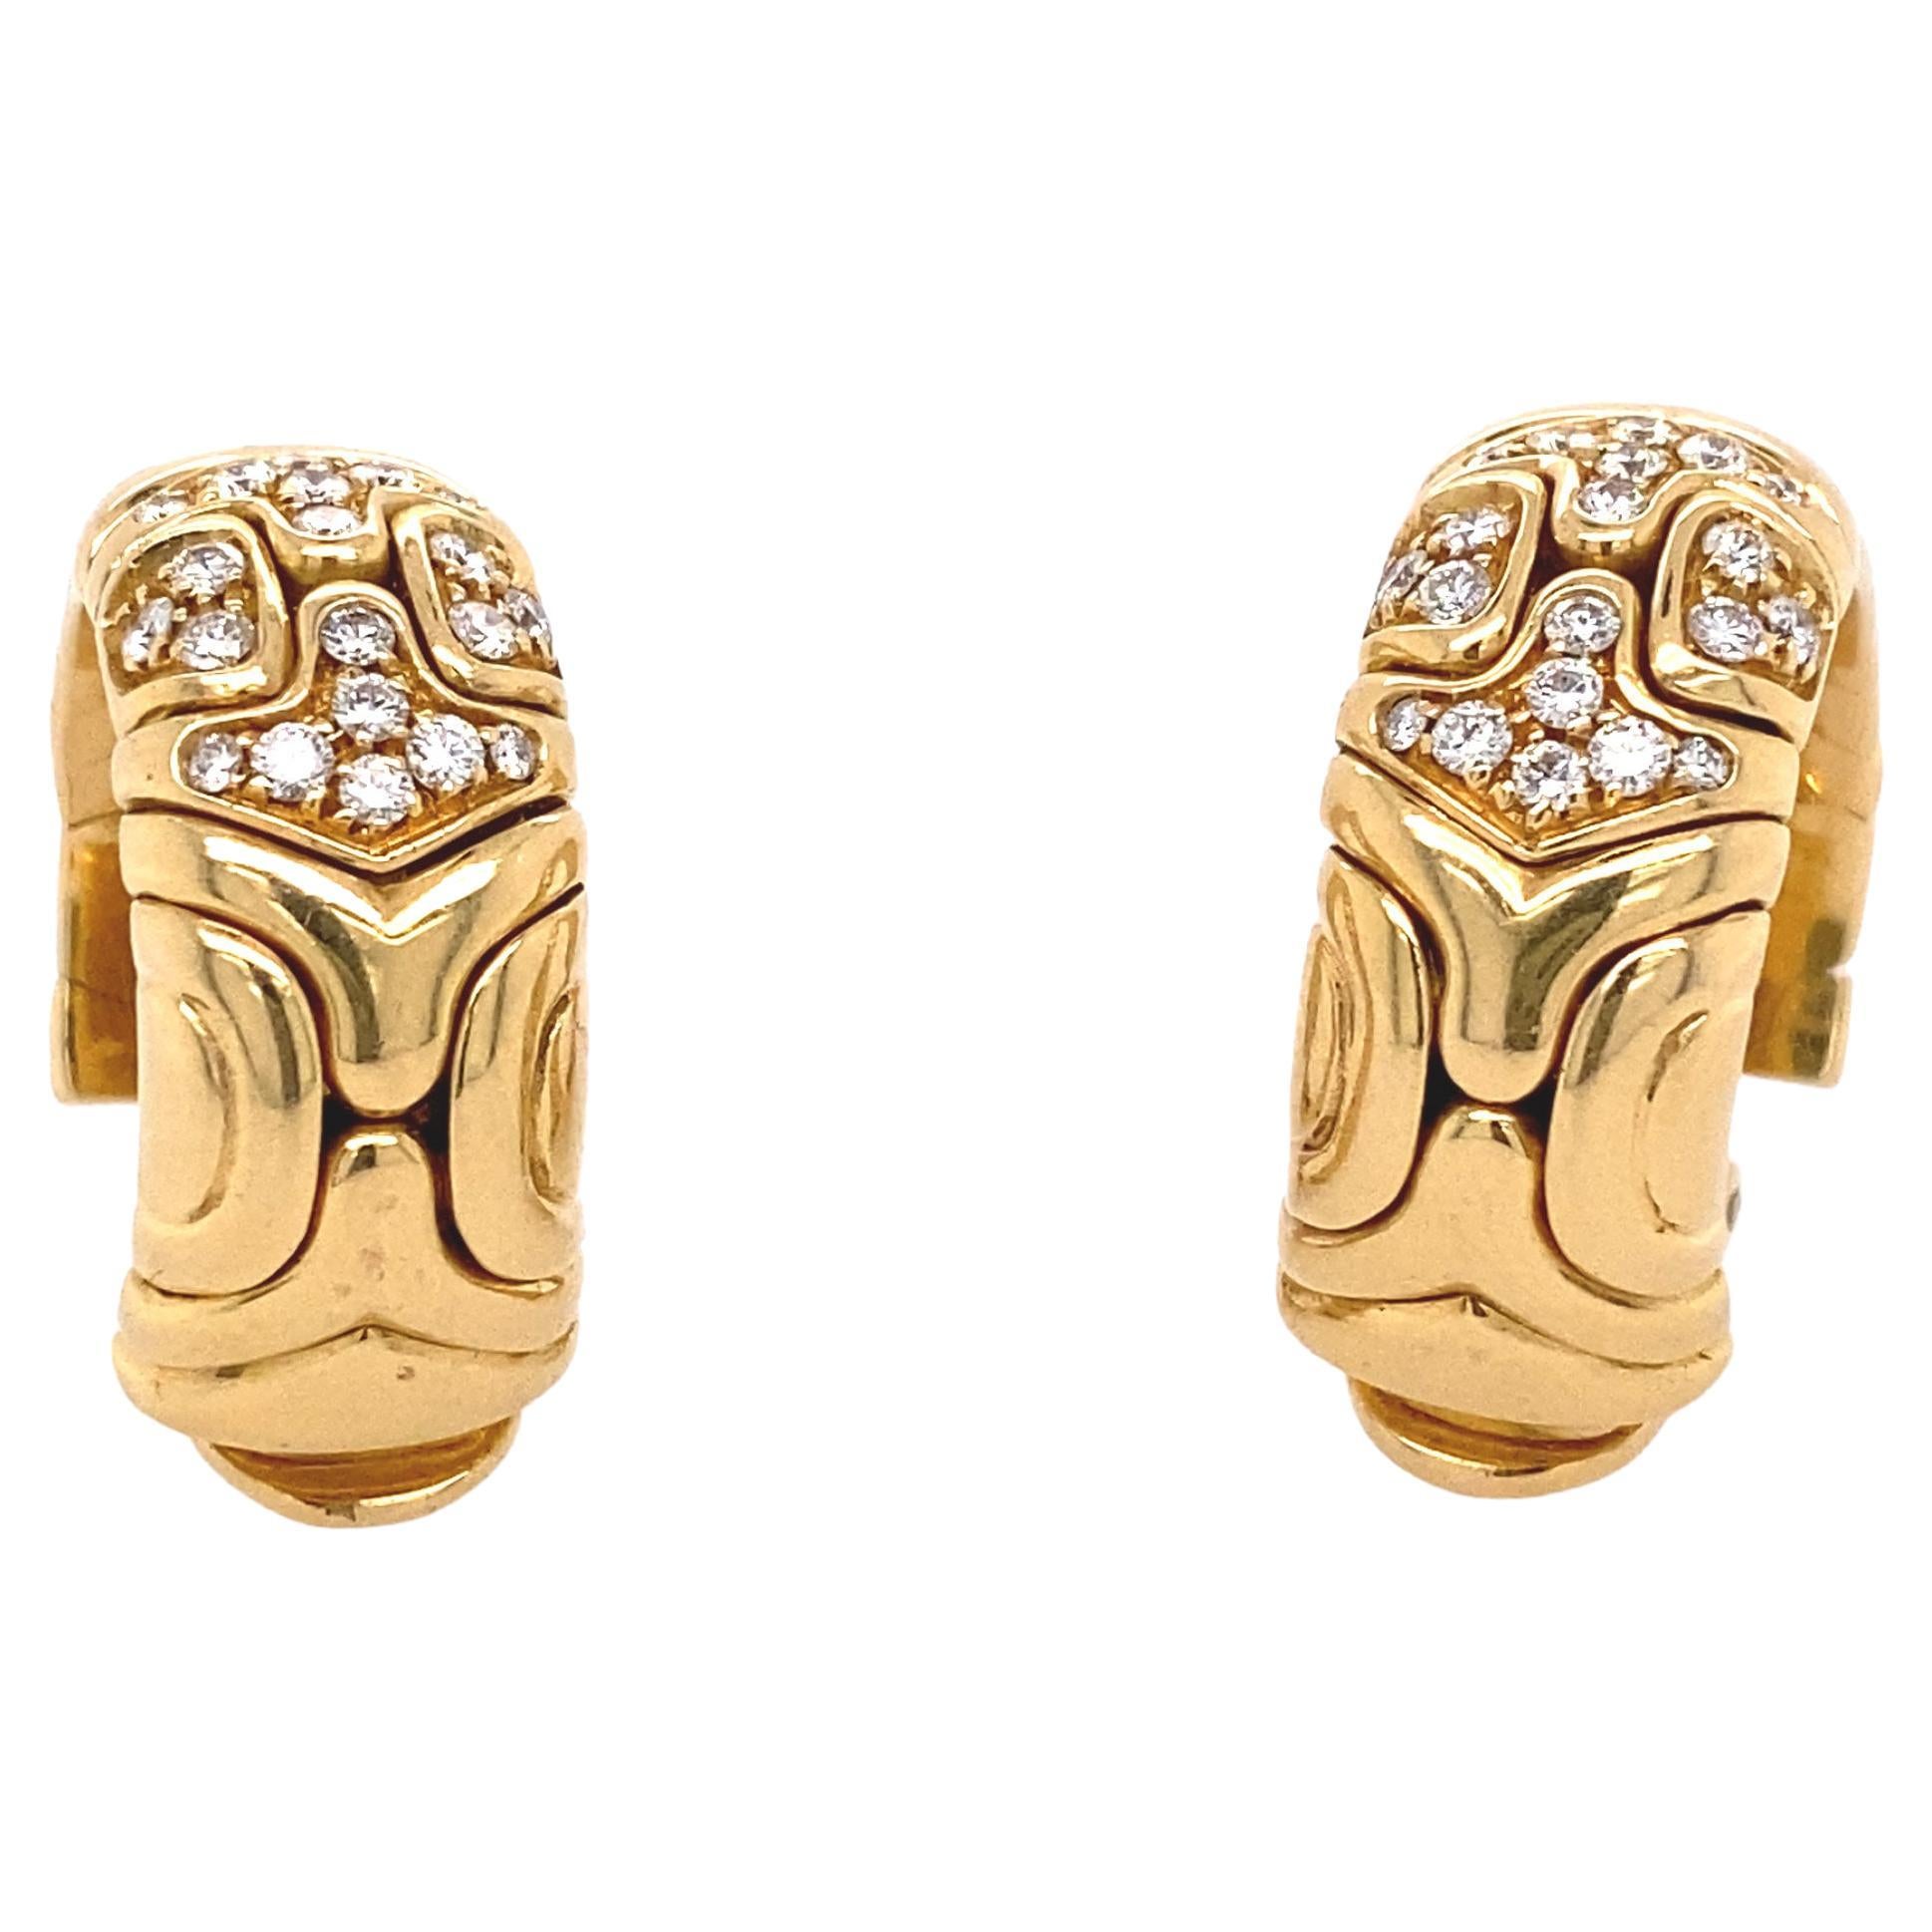 Bvlgari 18k Gold Diamond Earrings